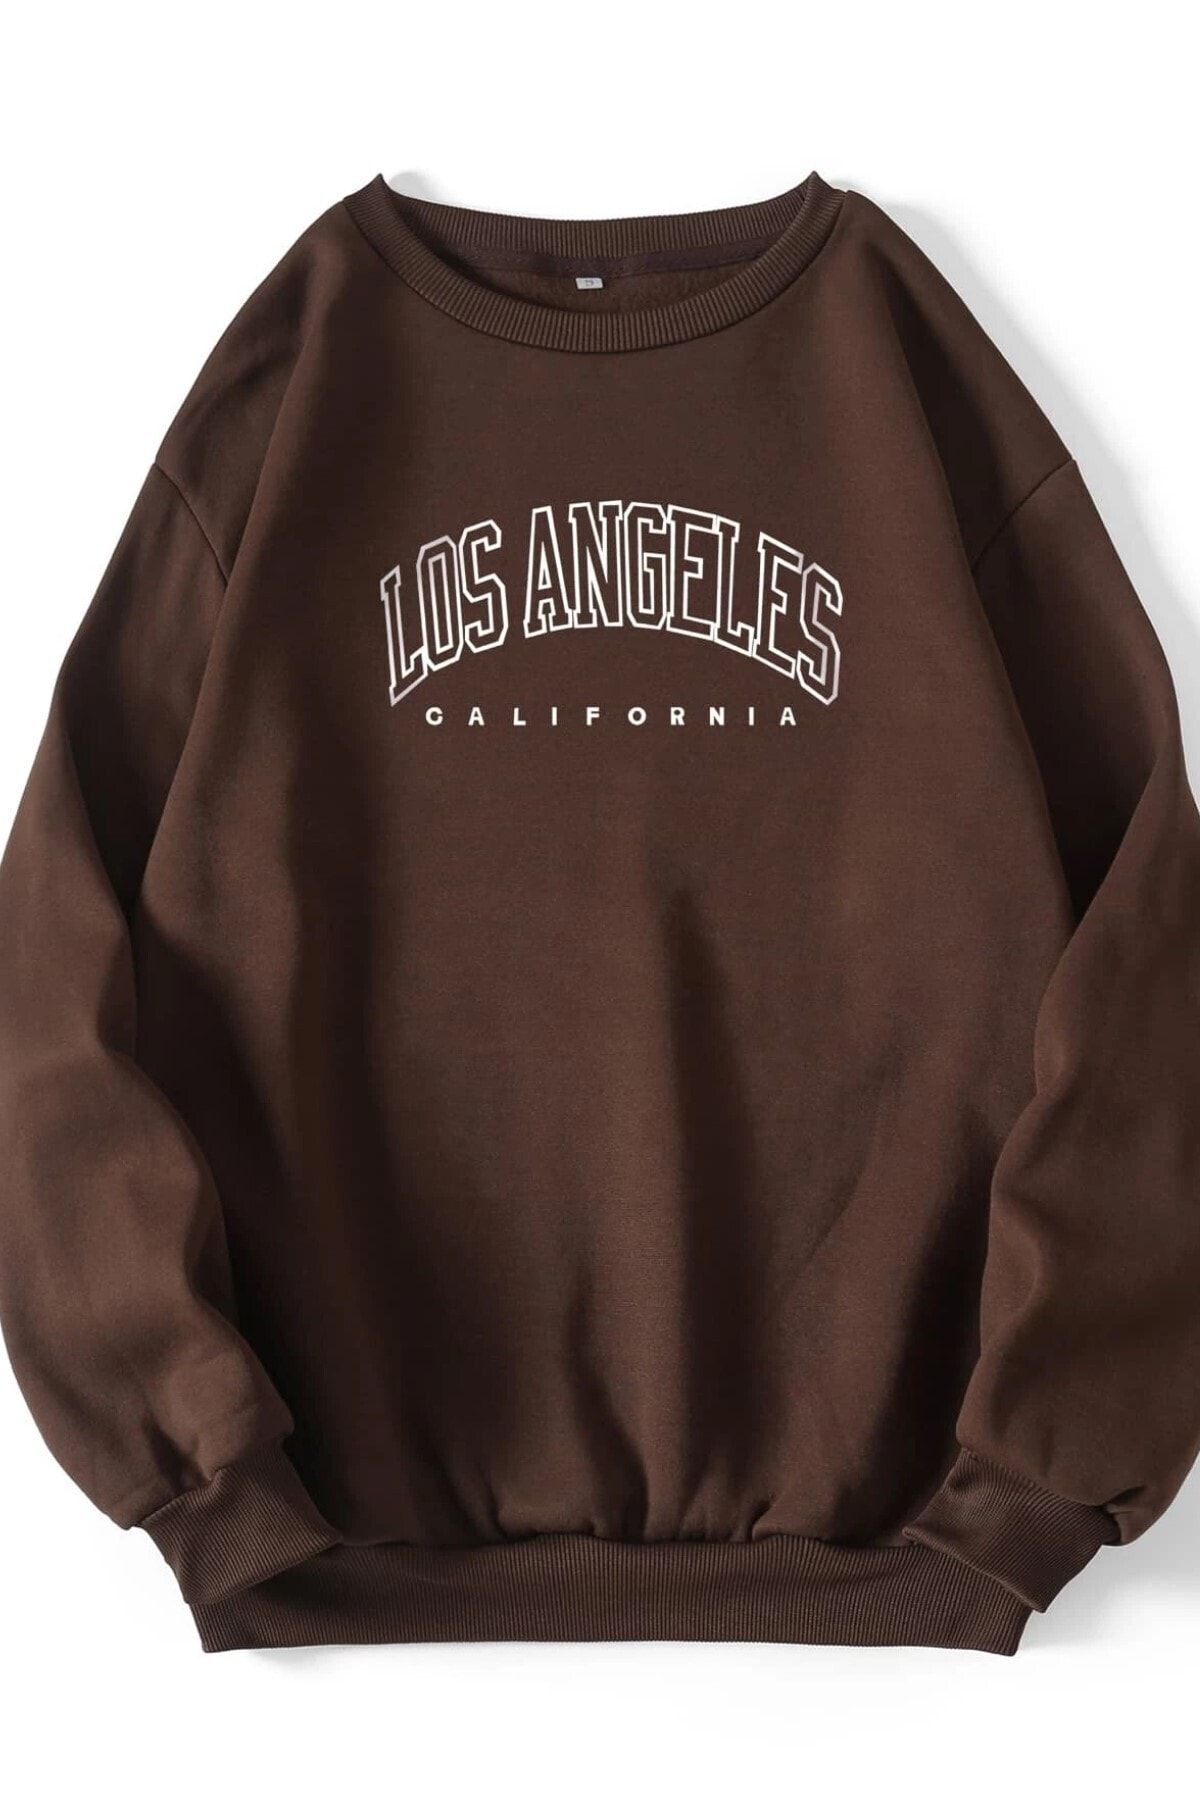 MODAGEN Unisex Kahverengi Los Angeles Baskılı Bisiklet Yaka Oversize Sweatshirt